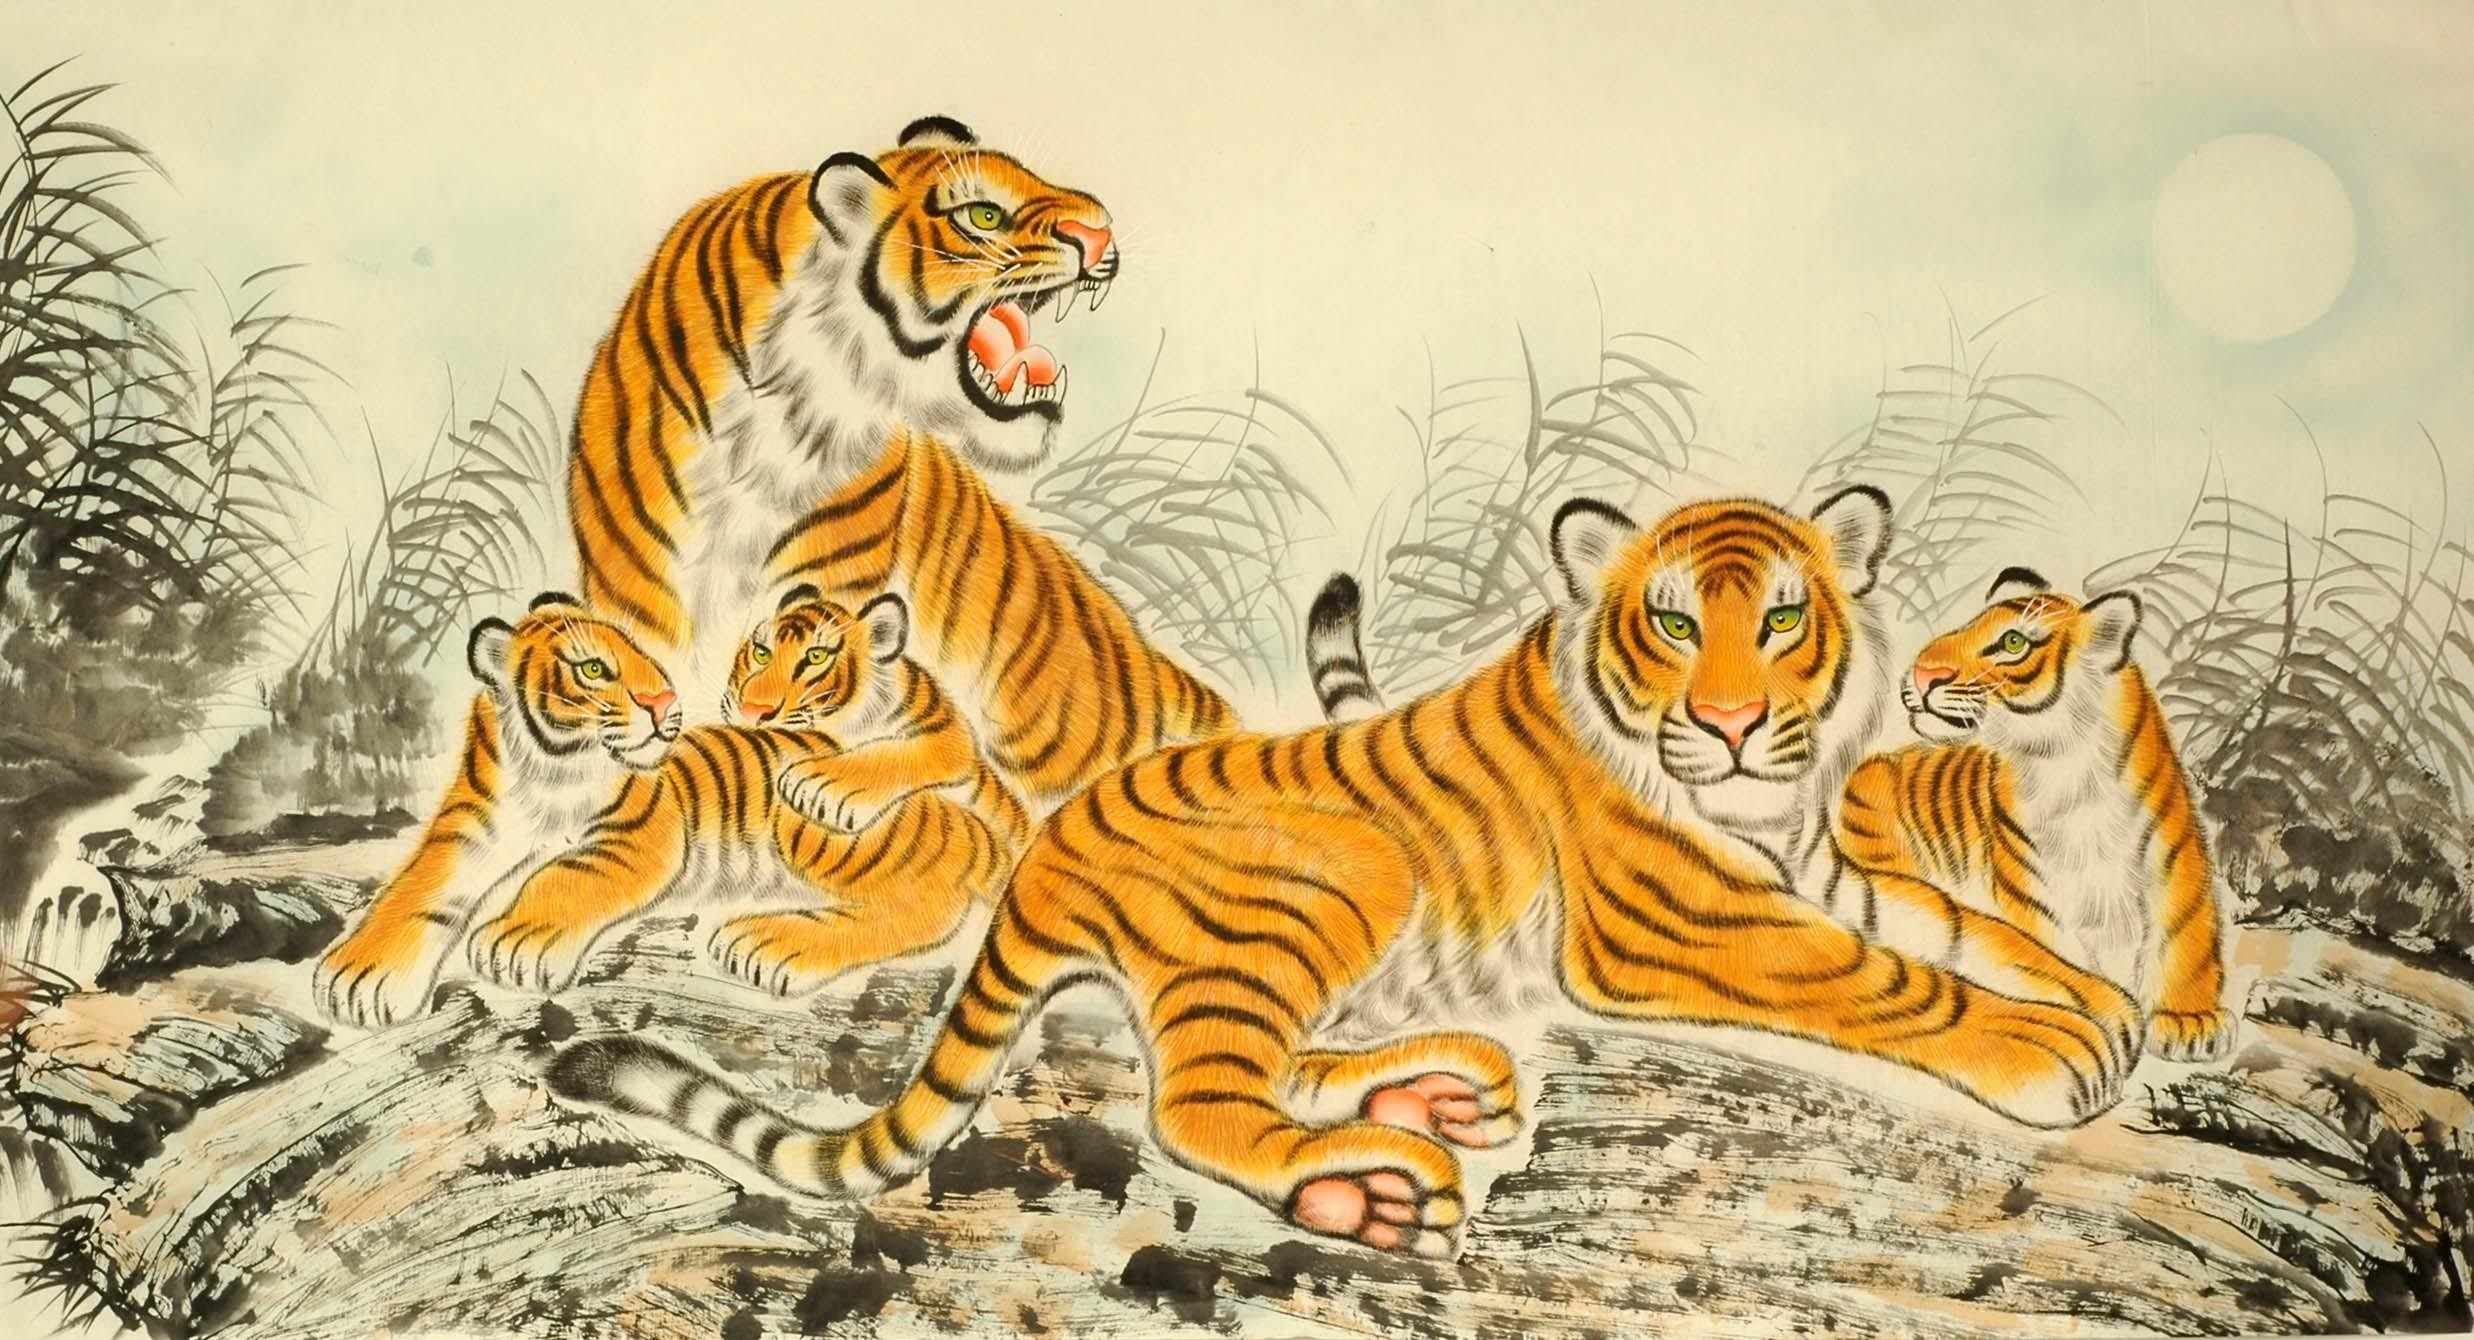 Chinese Tiger Painting - CNAG008383